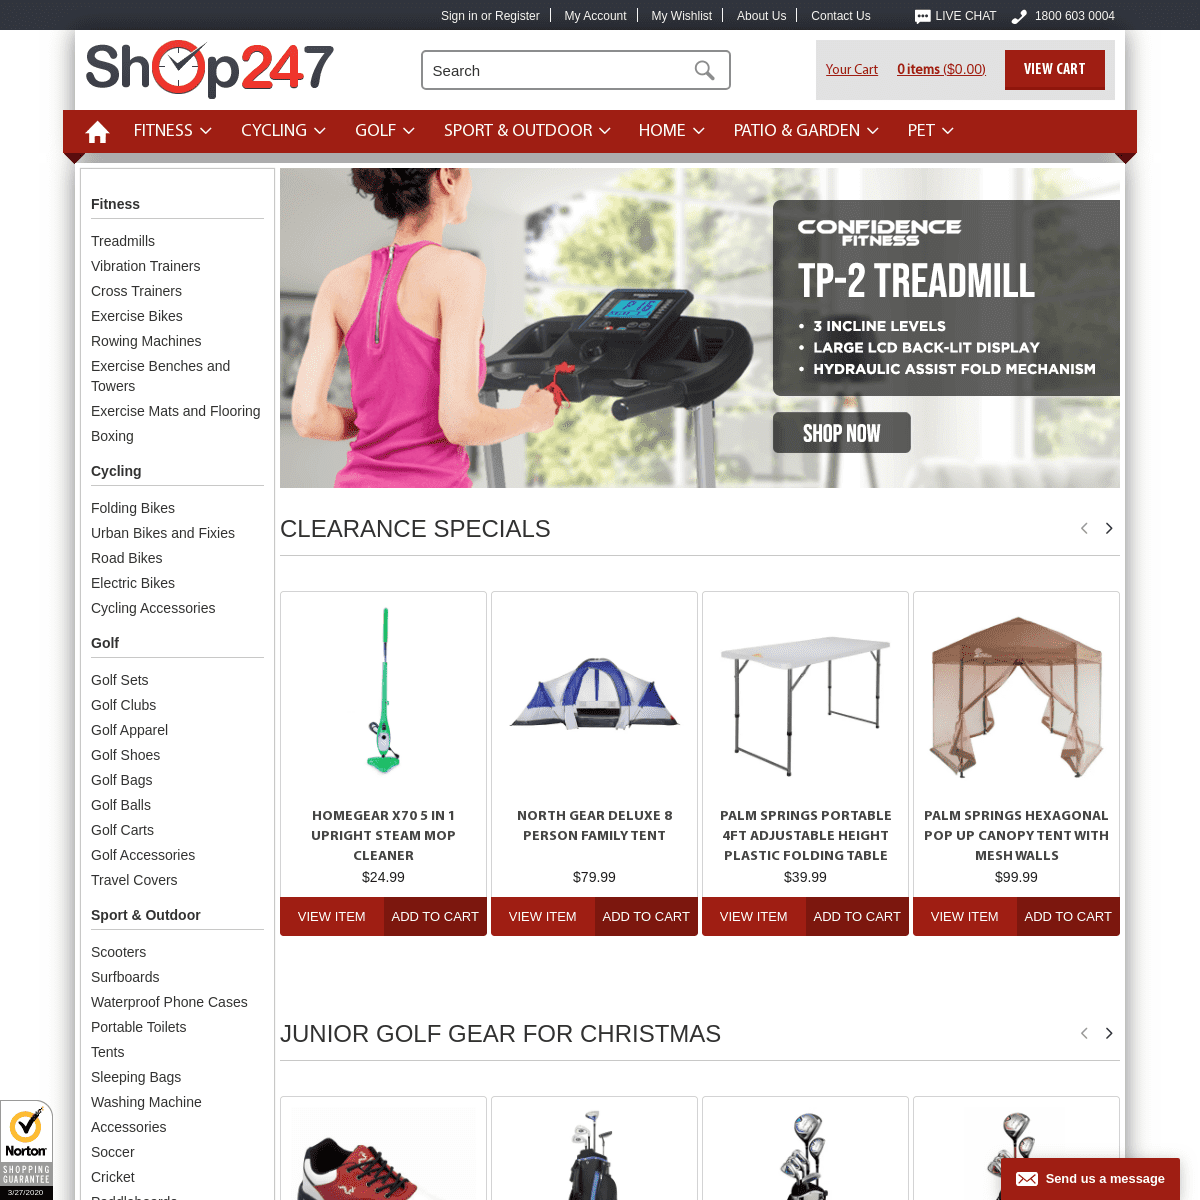 A complete backup of shop247.com